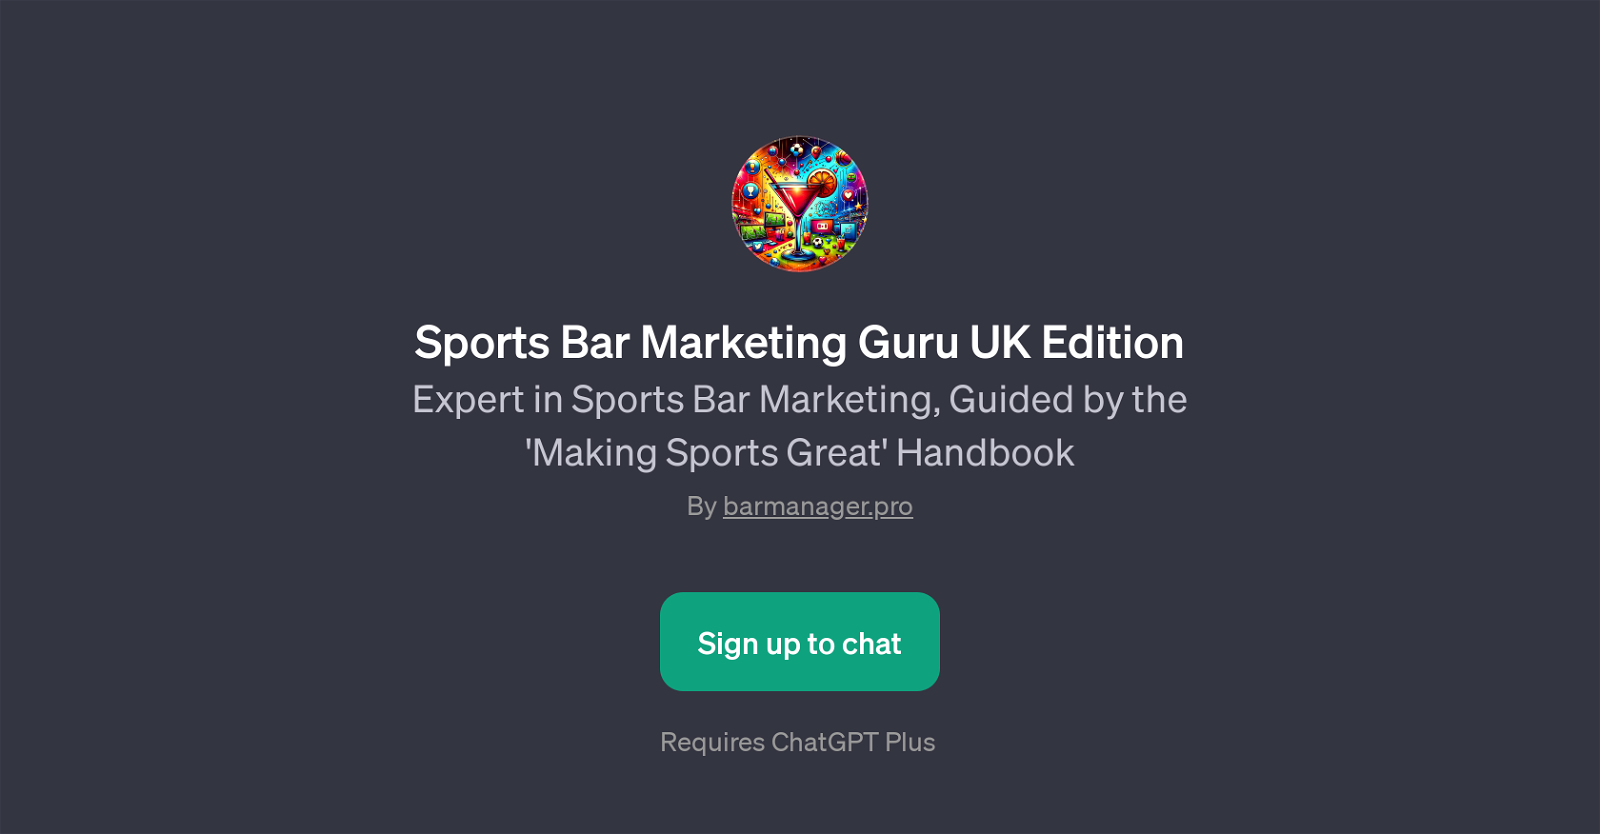 Sports Bar Marketing Guru UK Edition website